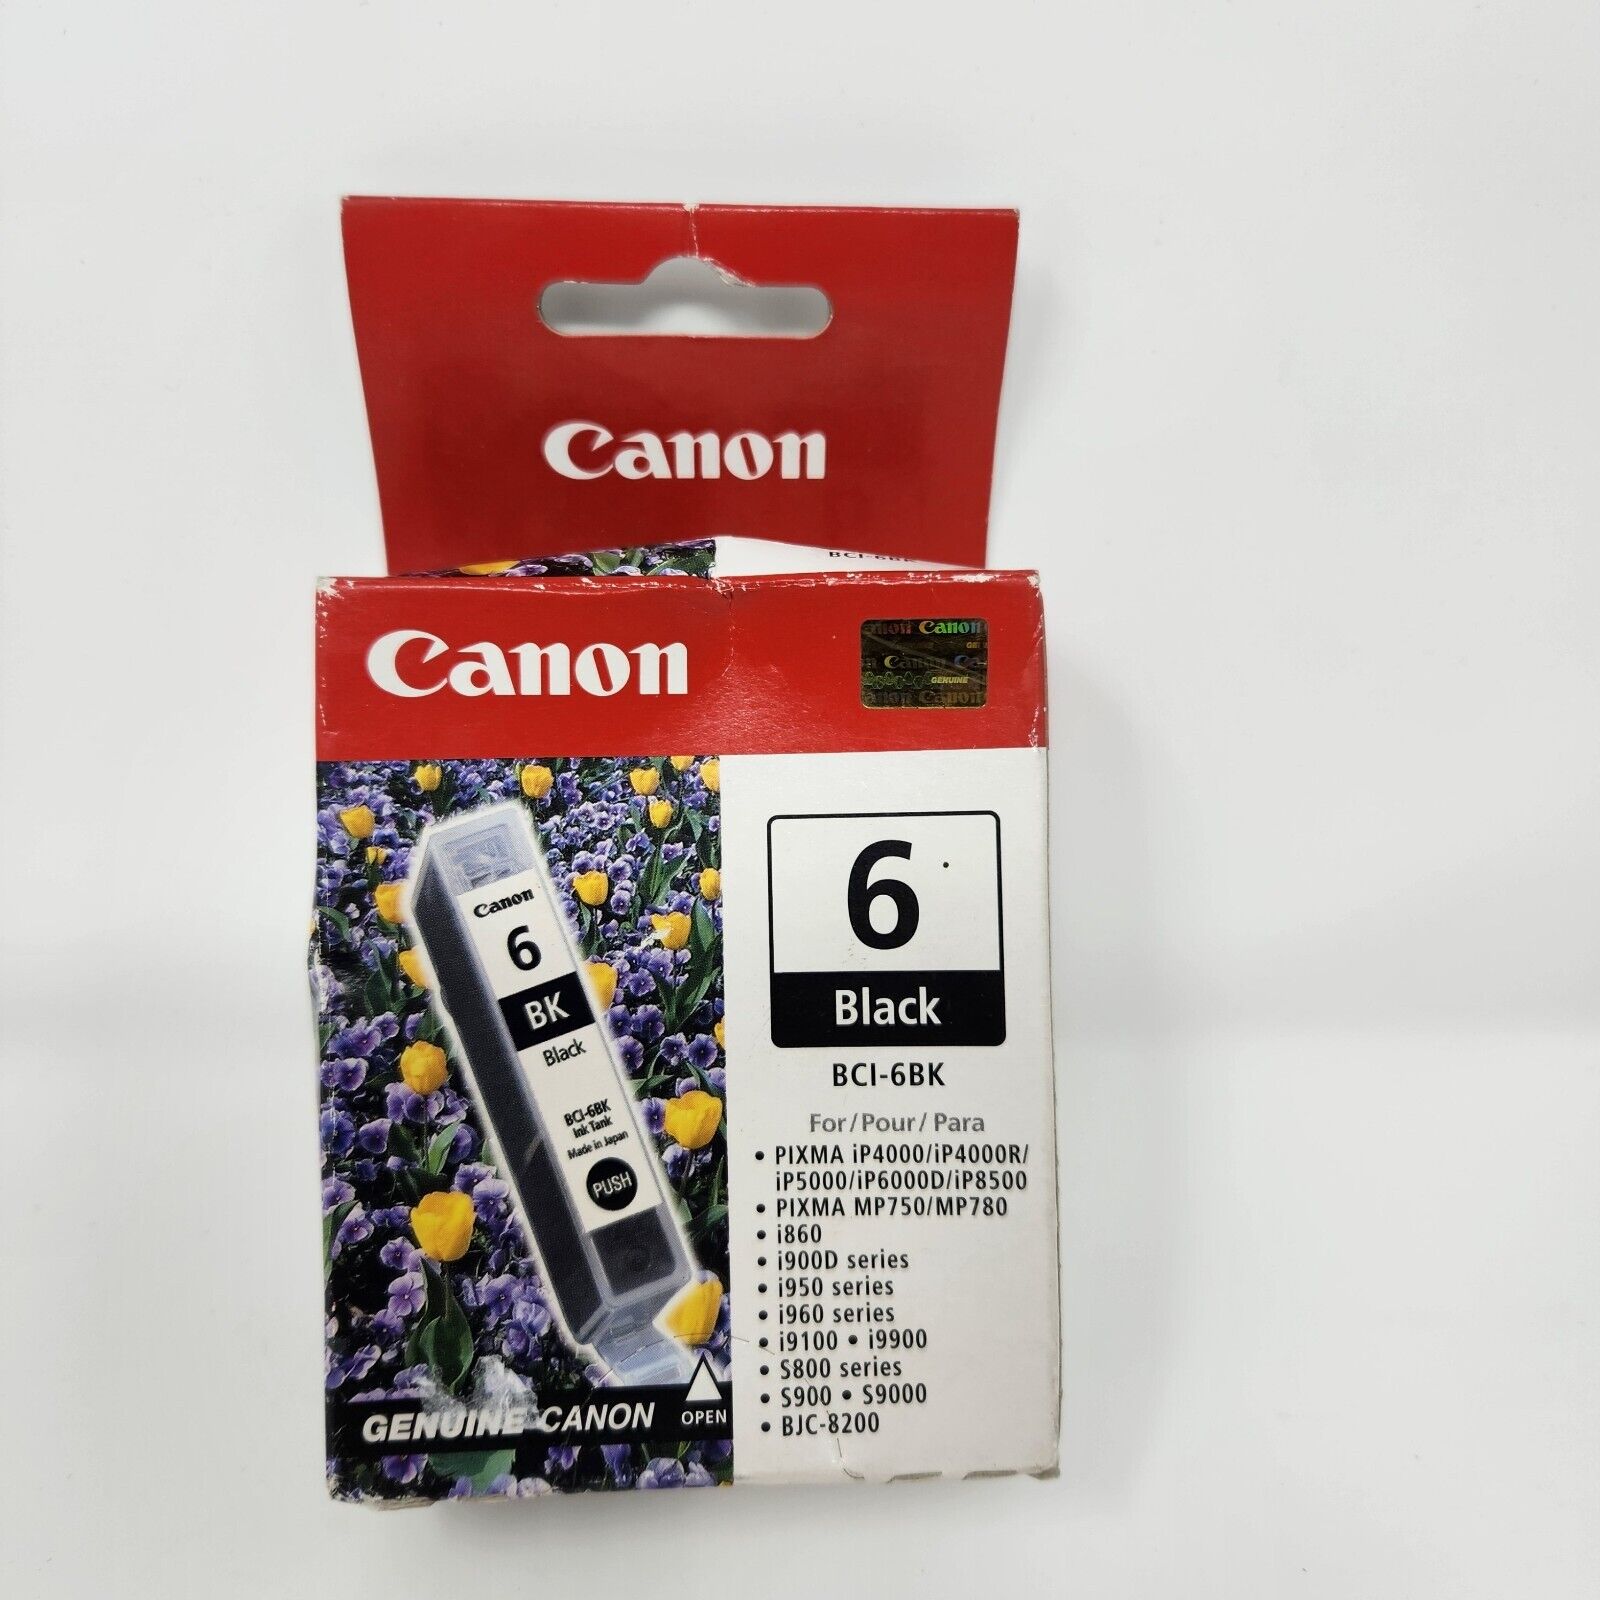 Canon Ink Cartridge BCI-6BK Black Genuine Canon New in Box